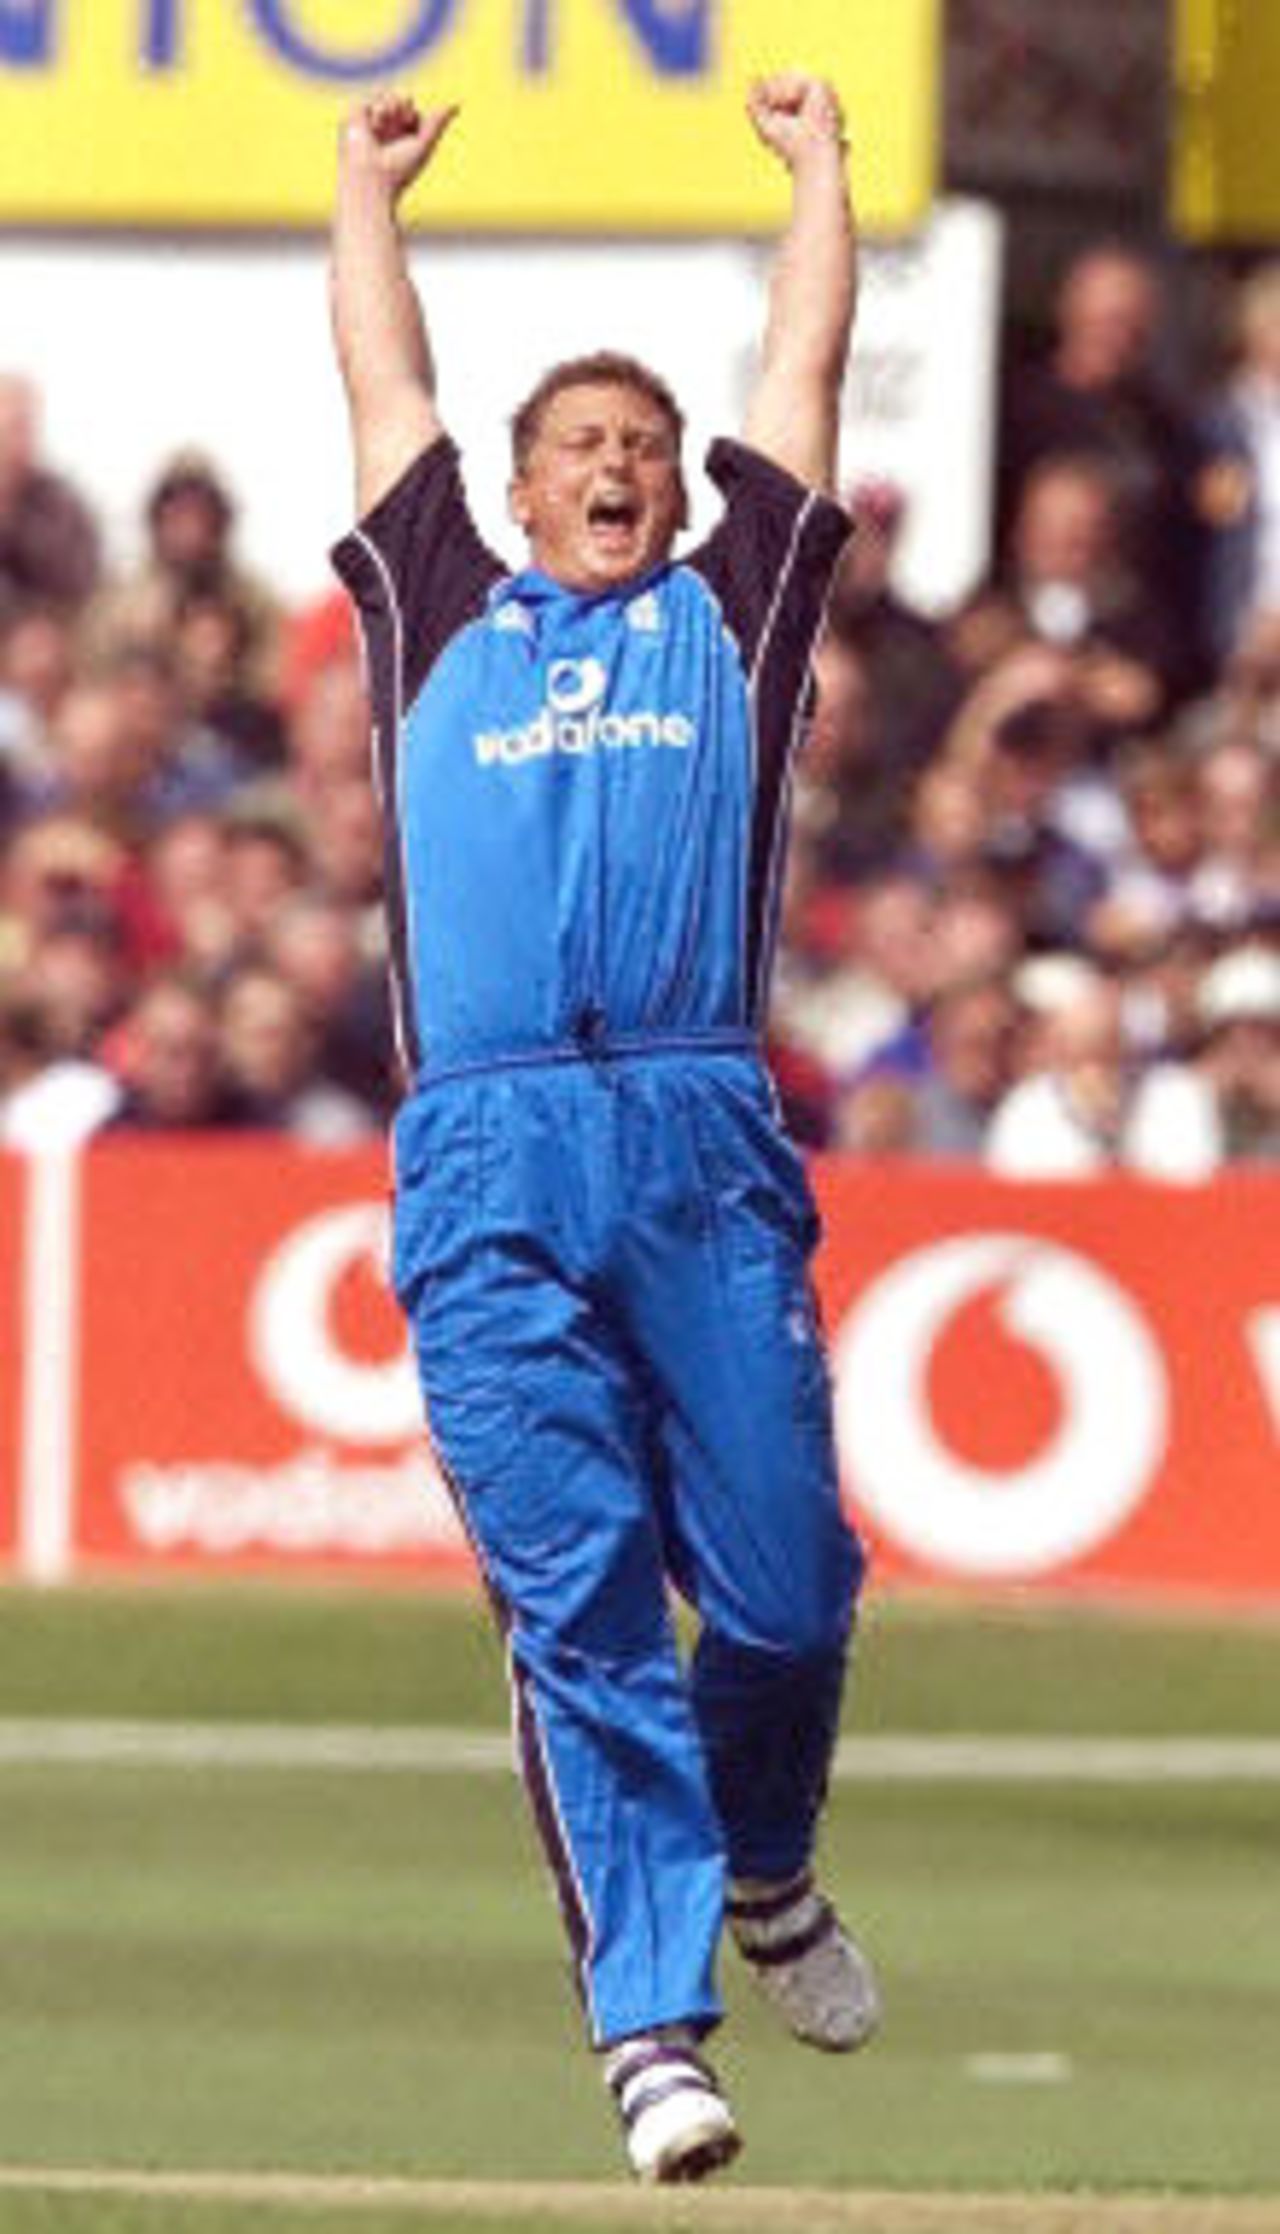 Darren Gough celebrates the wicket of Shahid Afridi, 7th ODI at Headingley, 17 June 2001.